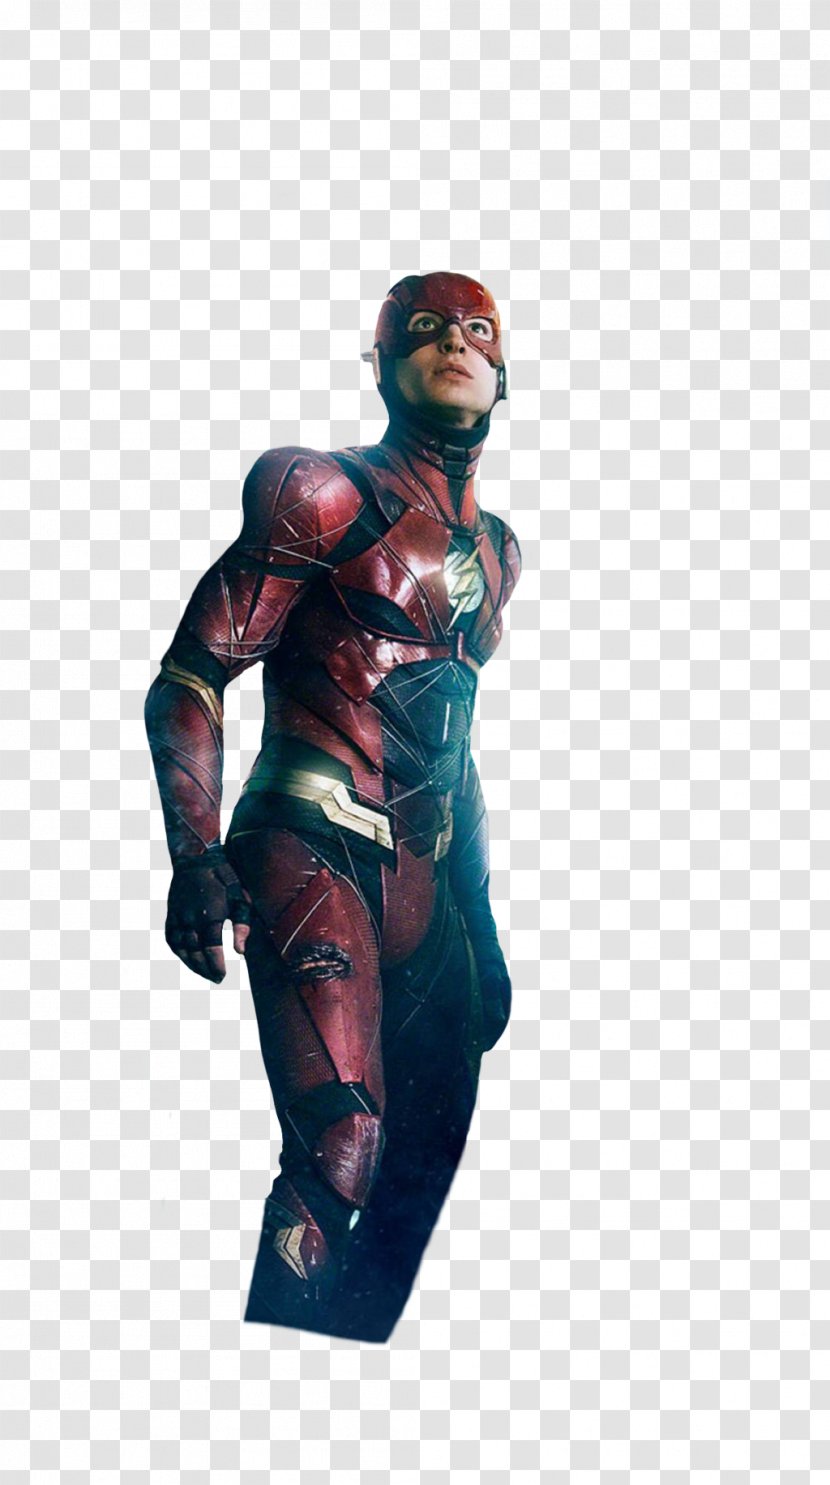 Justice League Heroes: The Flash Cyborg Aquaman - Superhero Transparent PNG